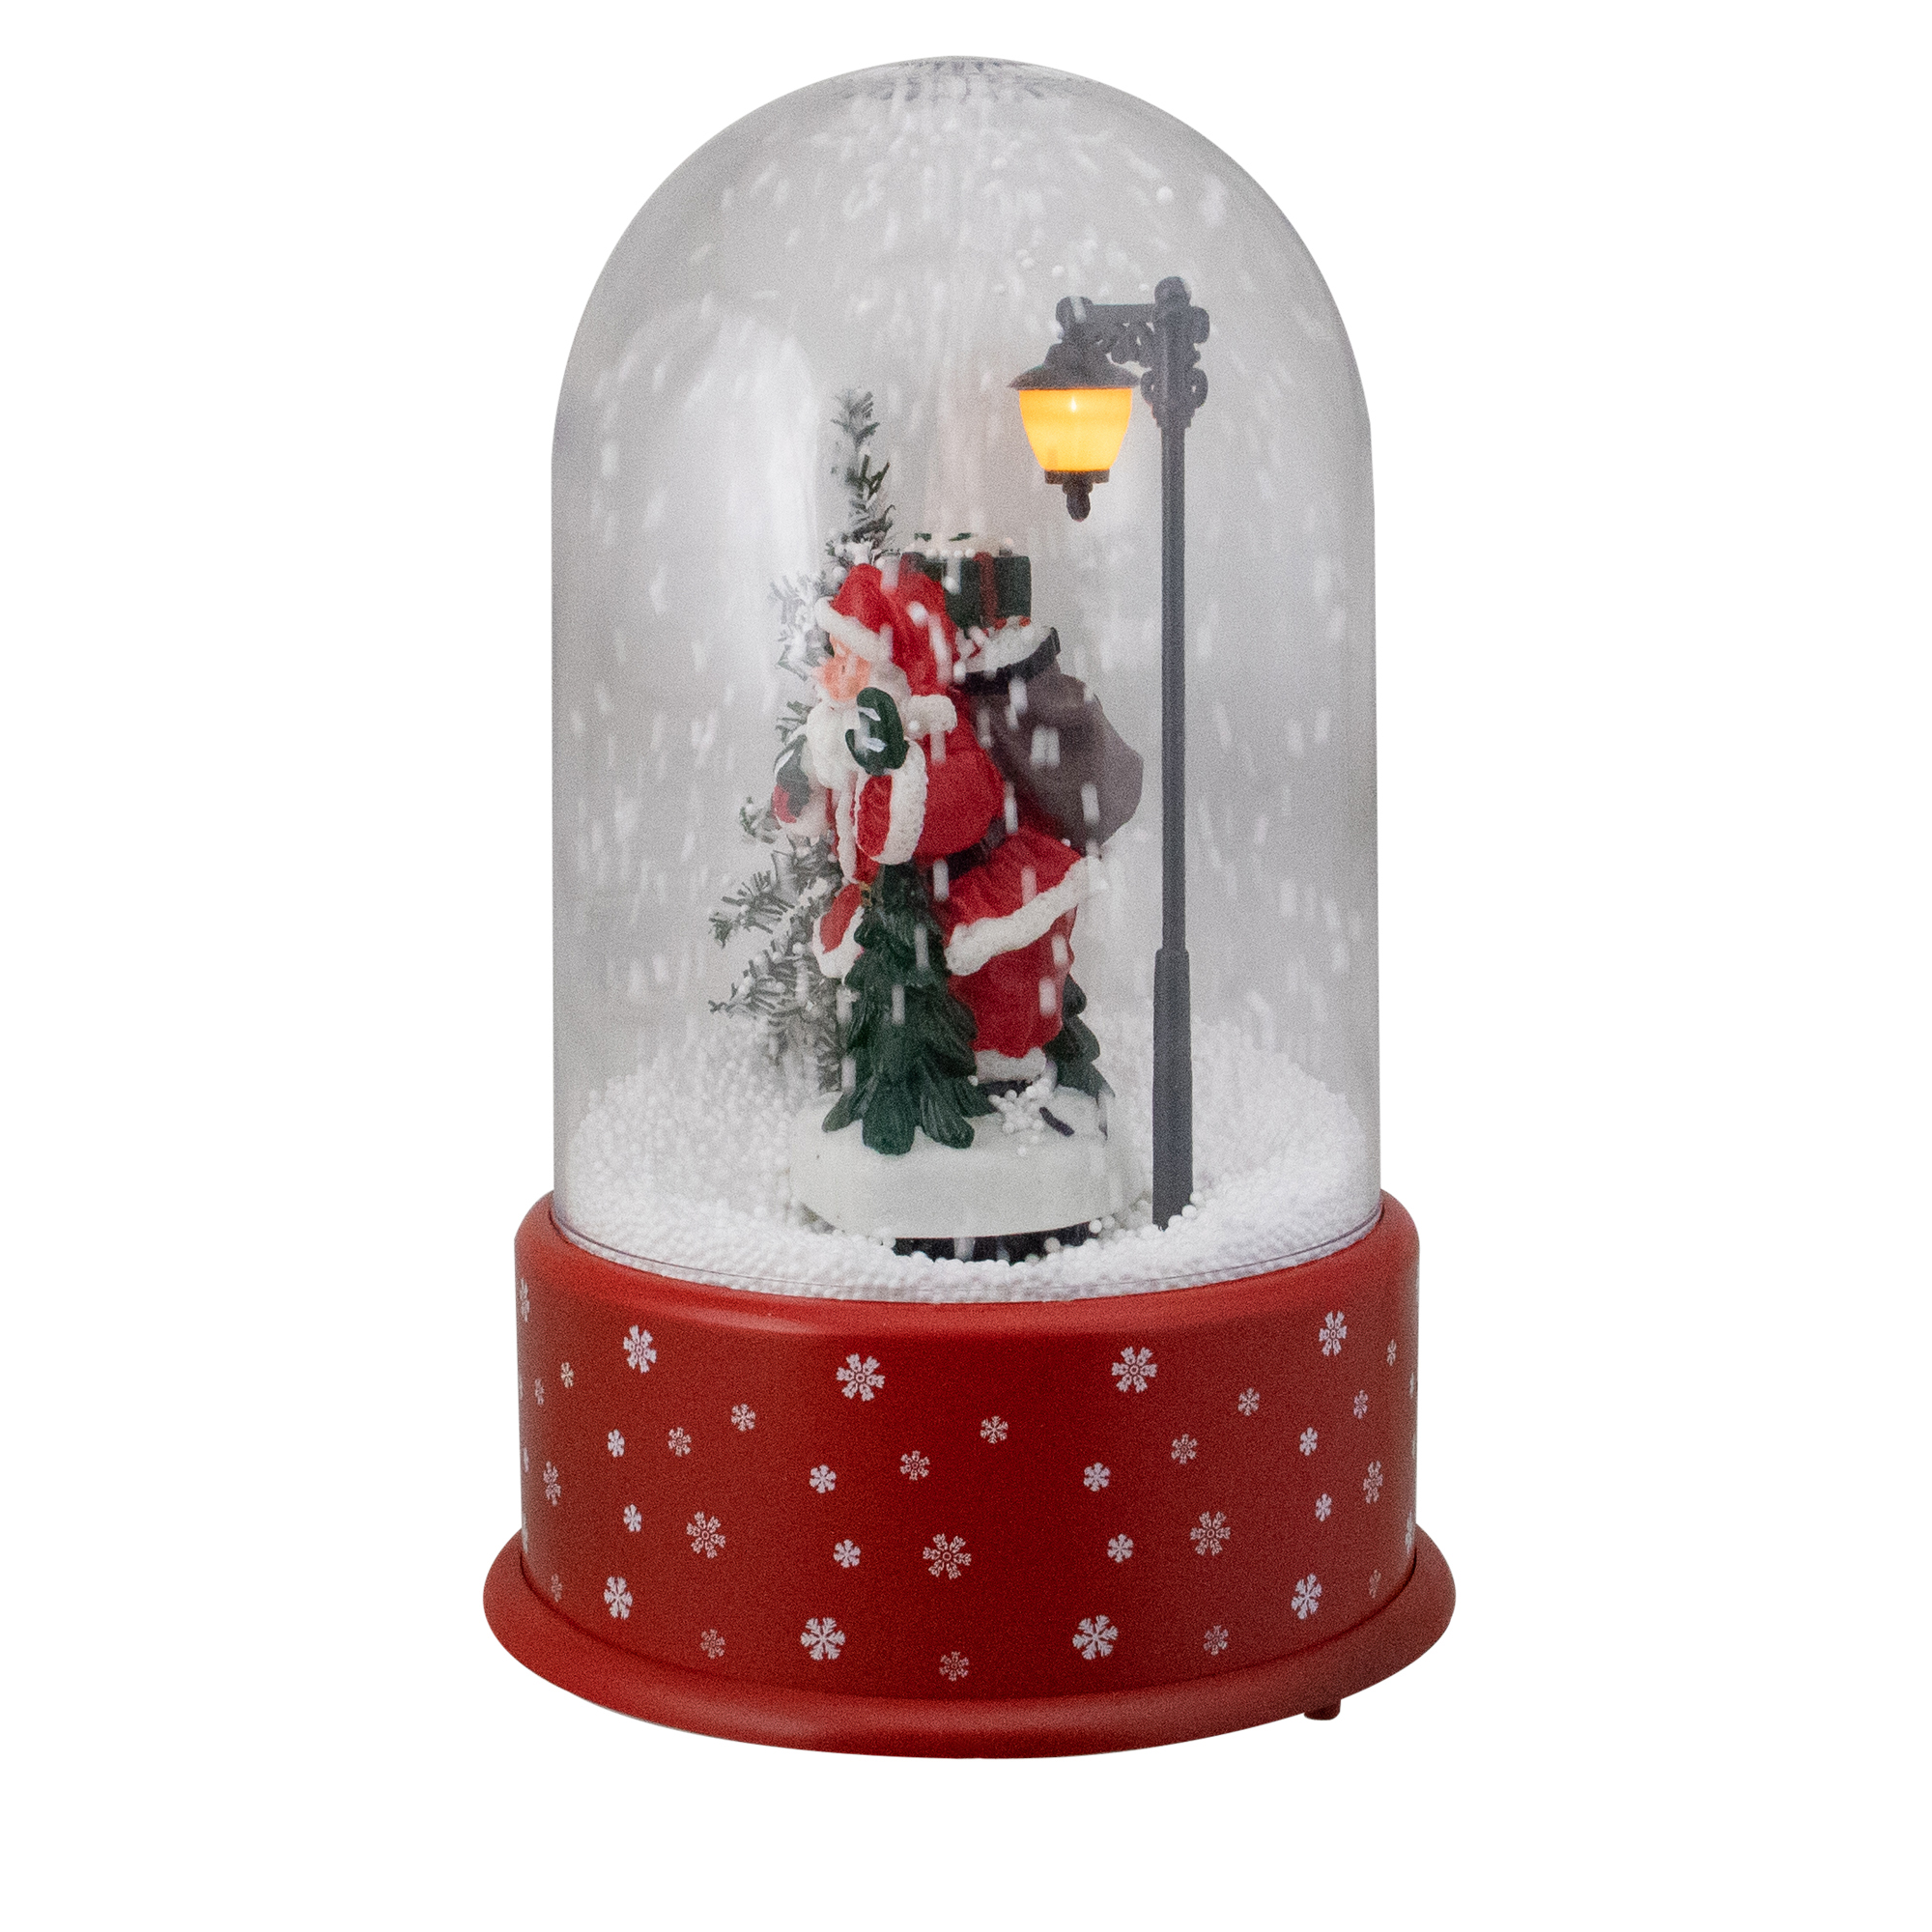 Northlight 11.75" Lighted Santa with Street Light Snowing Christmas Globe